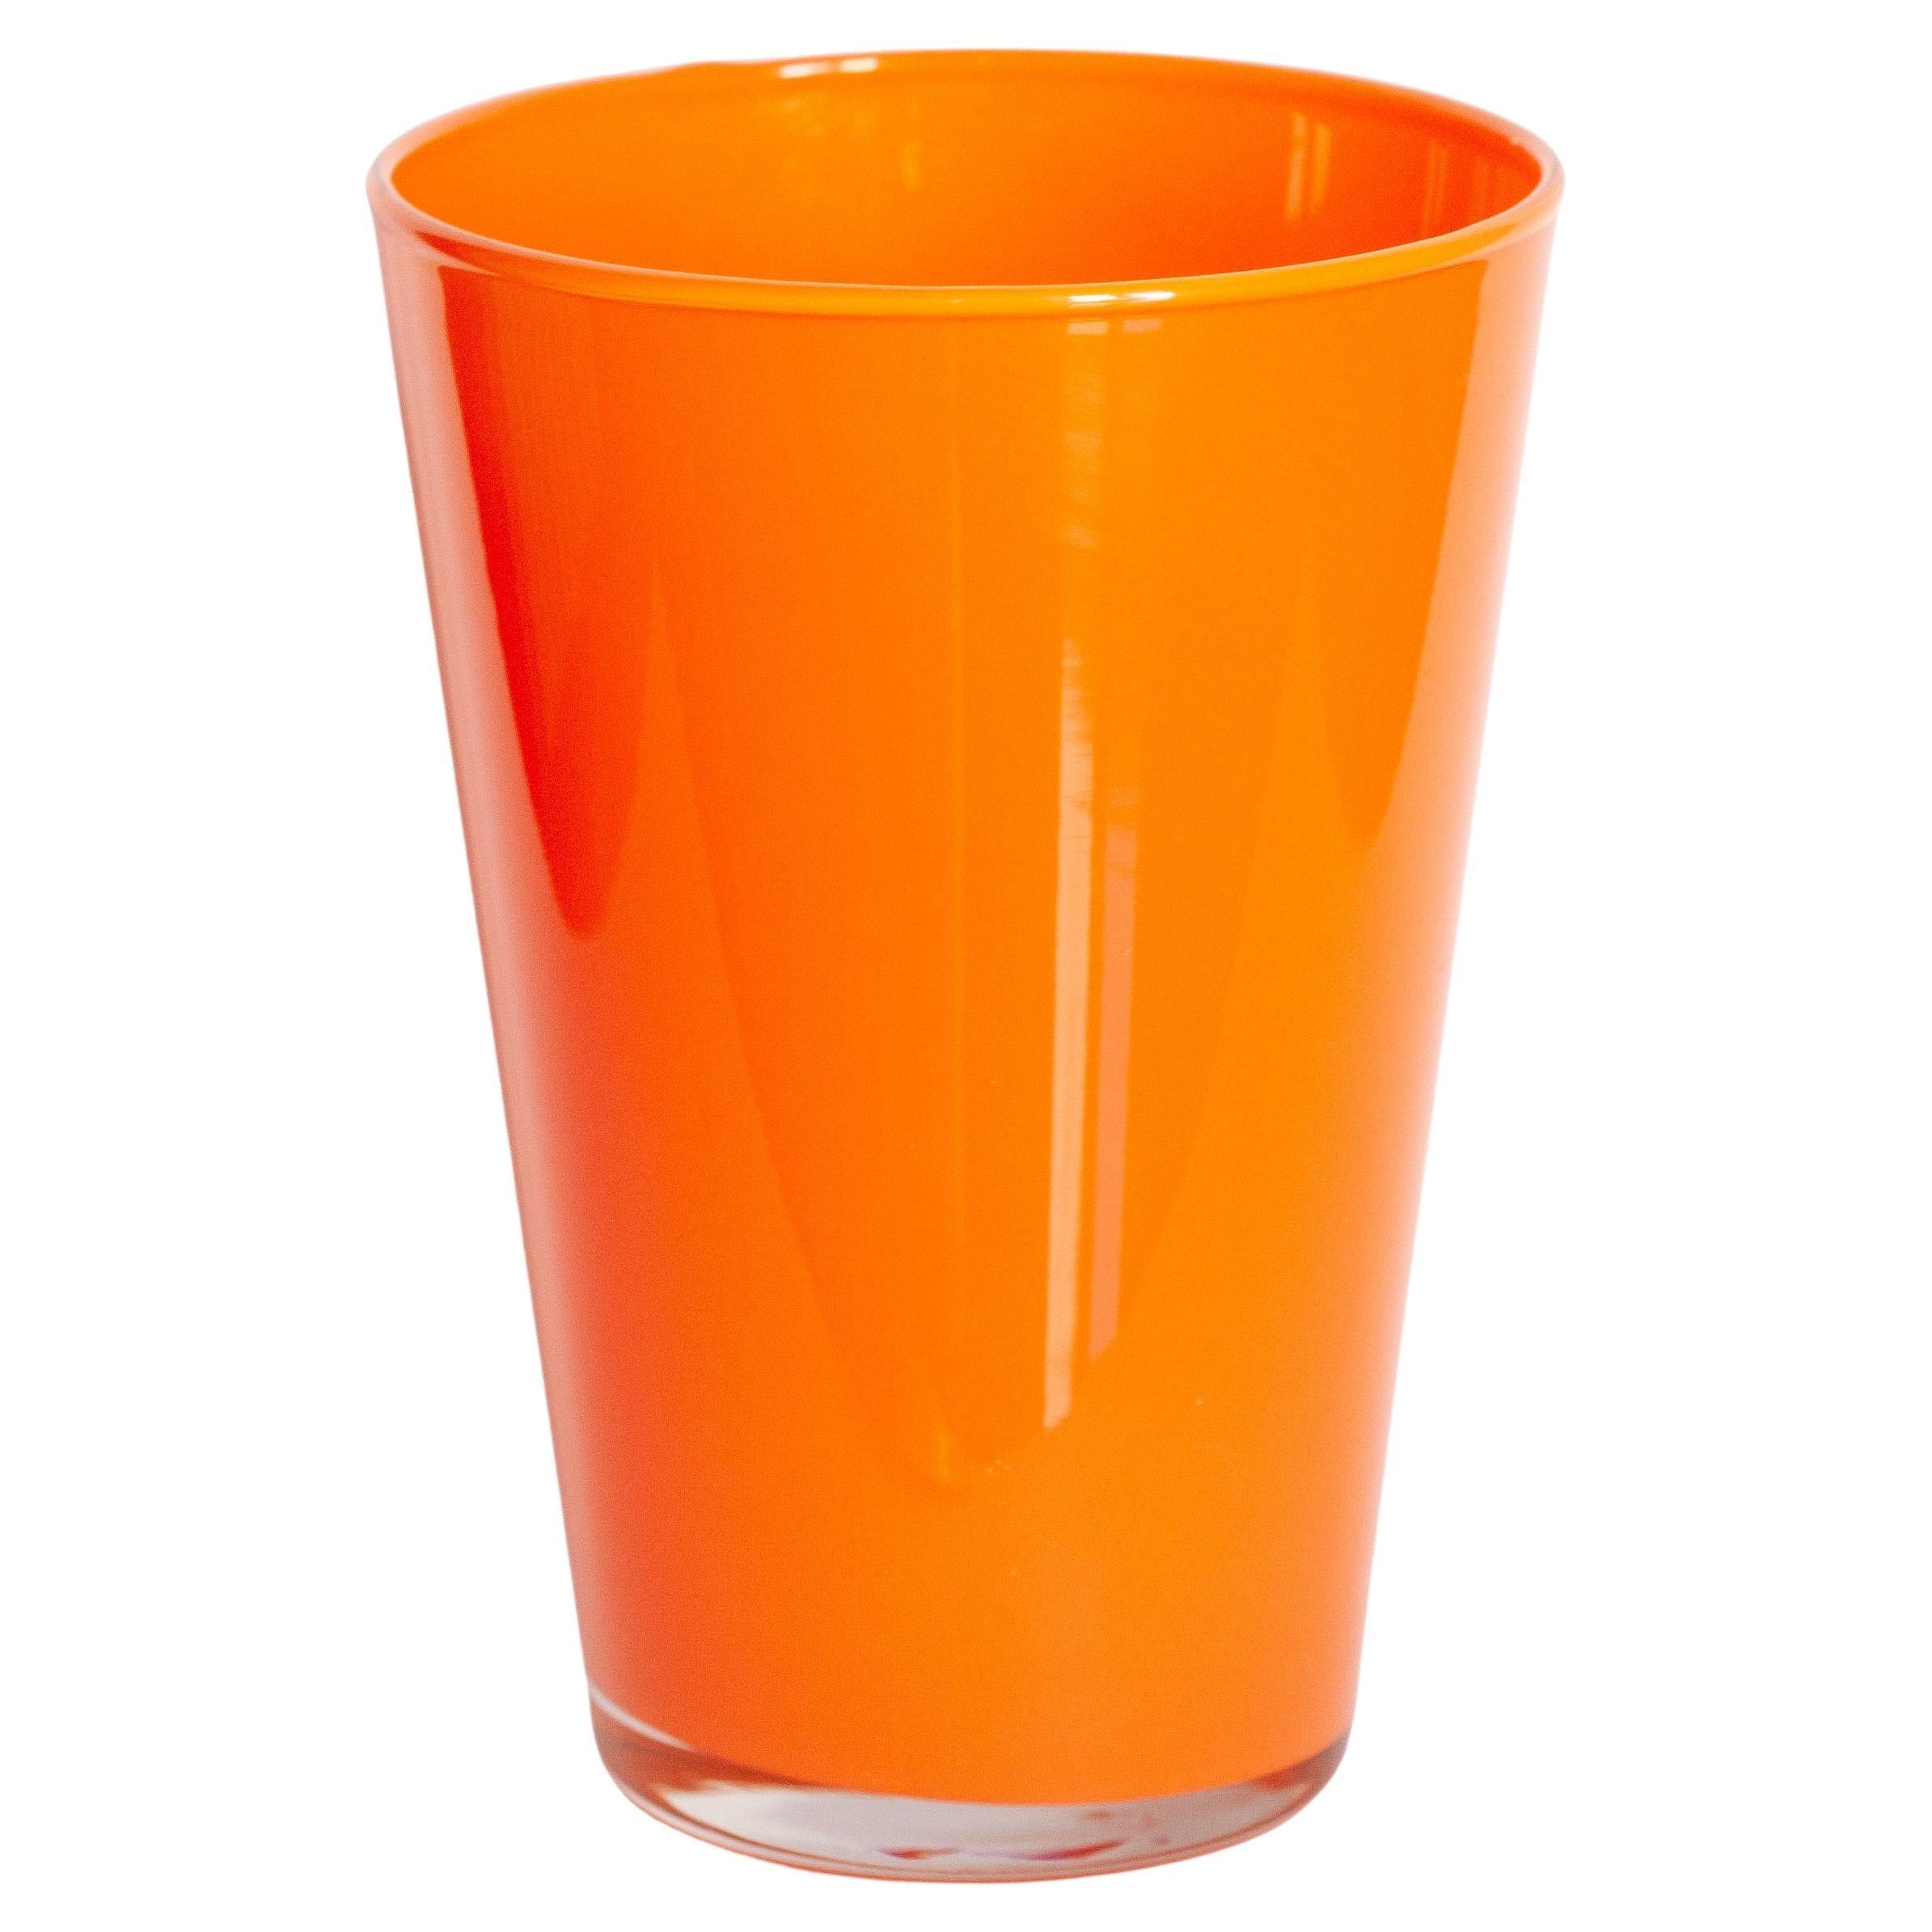 Orangefarbene Vintage-Vase, 20. Jahrhundert, Europa, 1960er Jahre